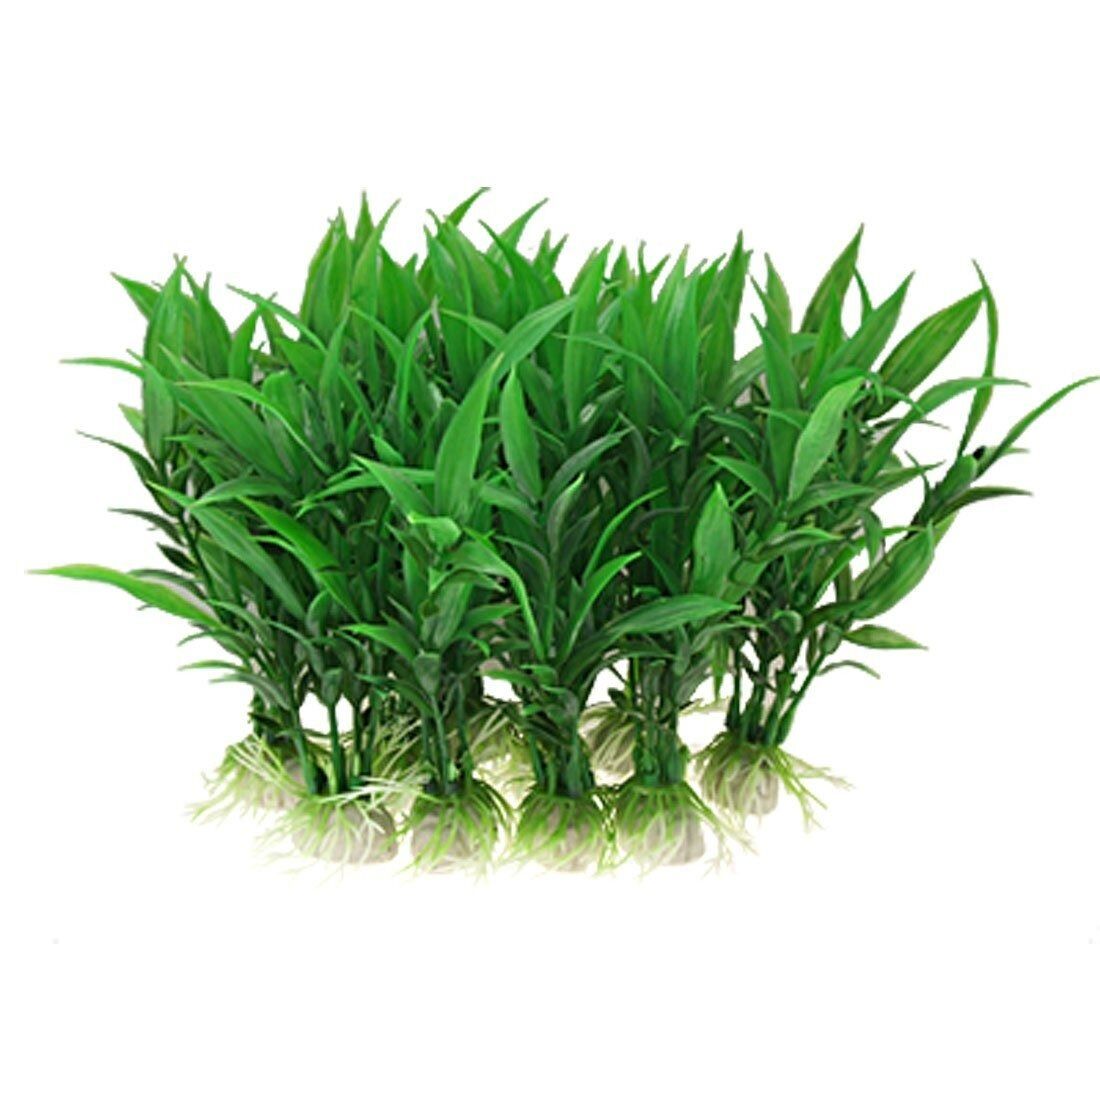 New Plastic Aquarium Tank Plants Grass Decoration, 10-Piece, Green